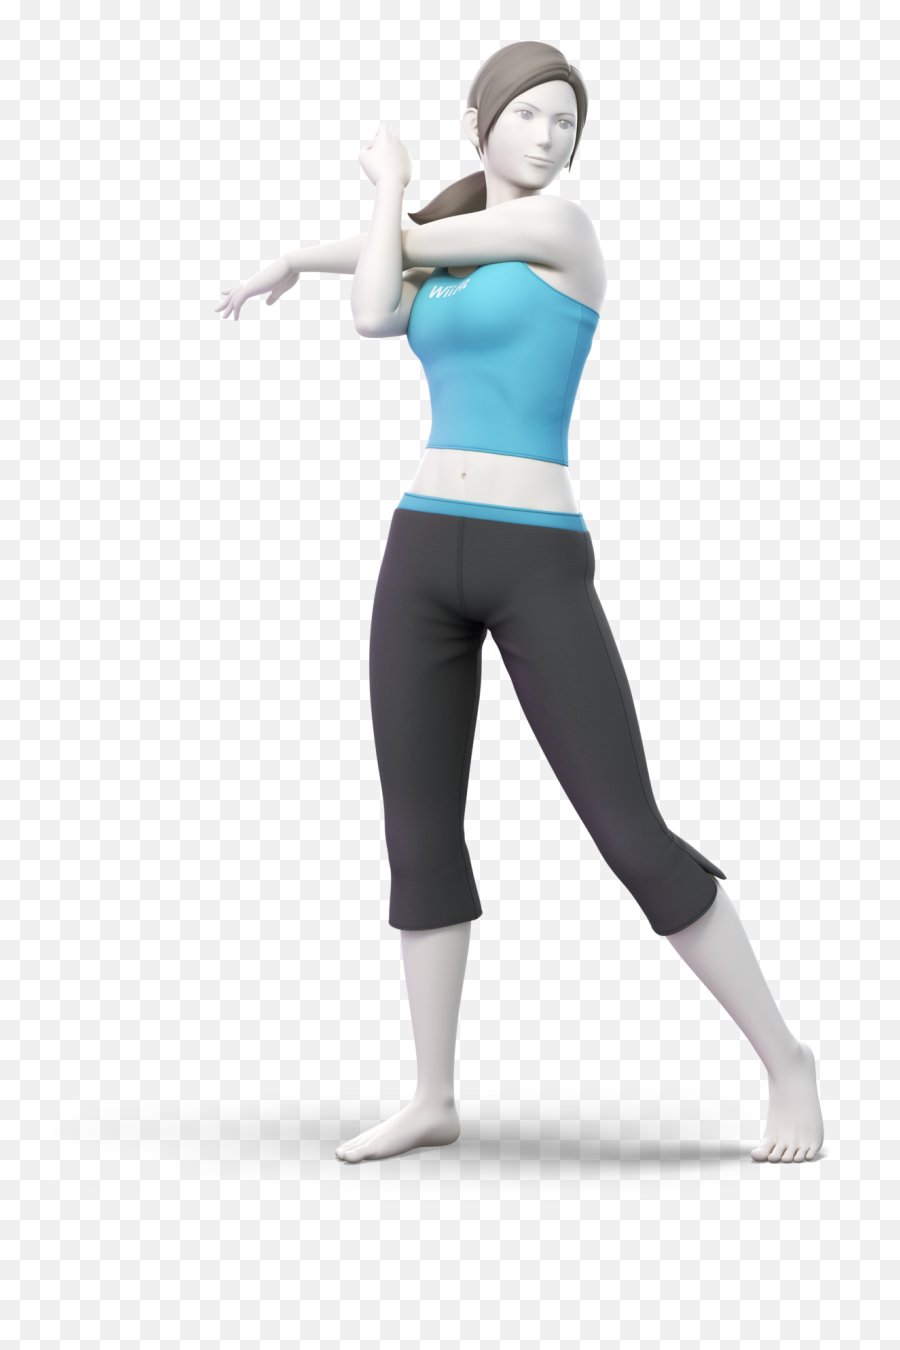 Wii Fit Trainer - Super Smash Bros Ultimate Wii Fit Trainer Png,Masahiro Sakurai Png